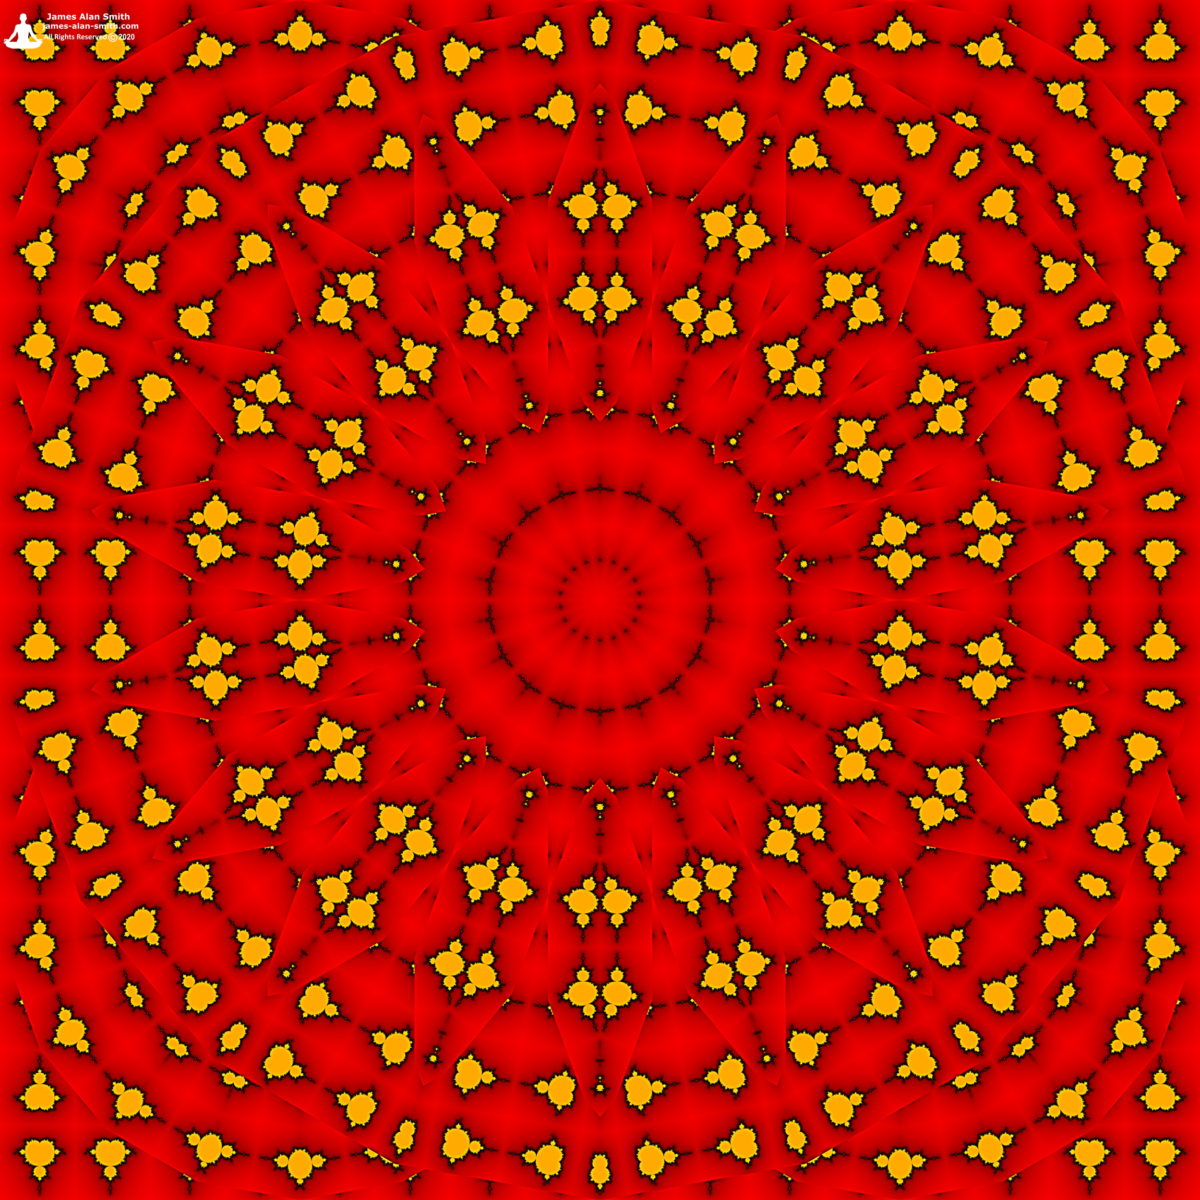 Mandelbrot Mandala: Artwork by James Alan Smith